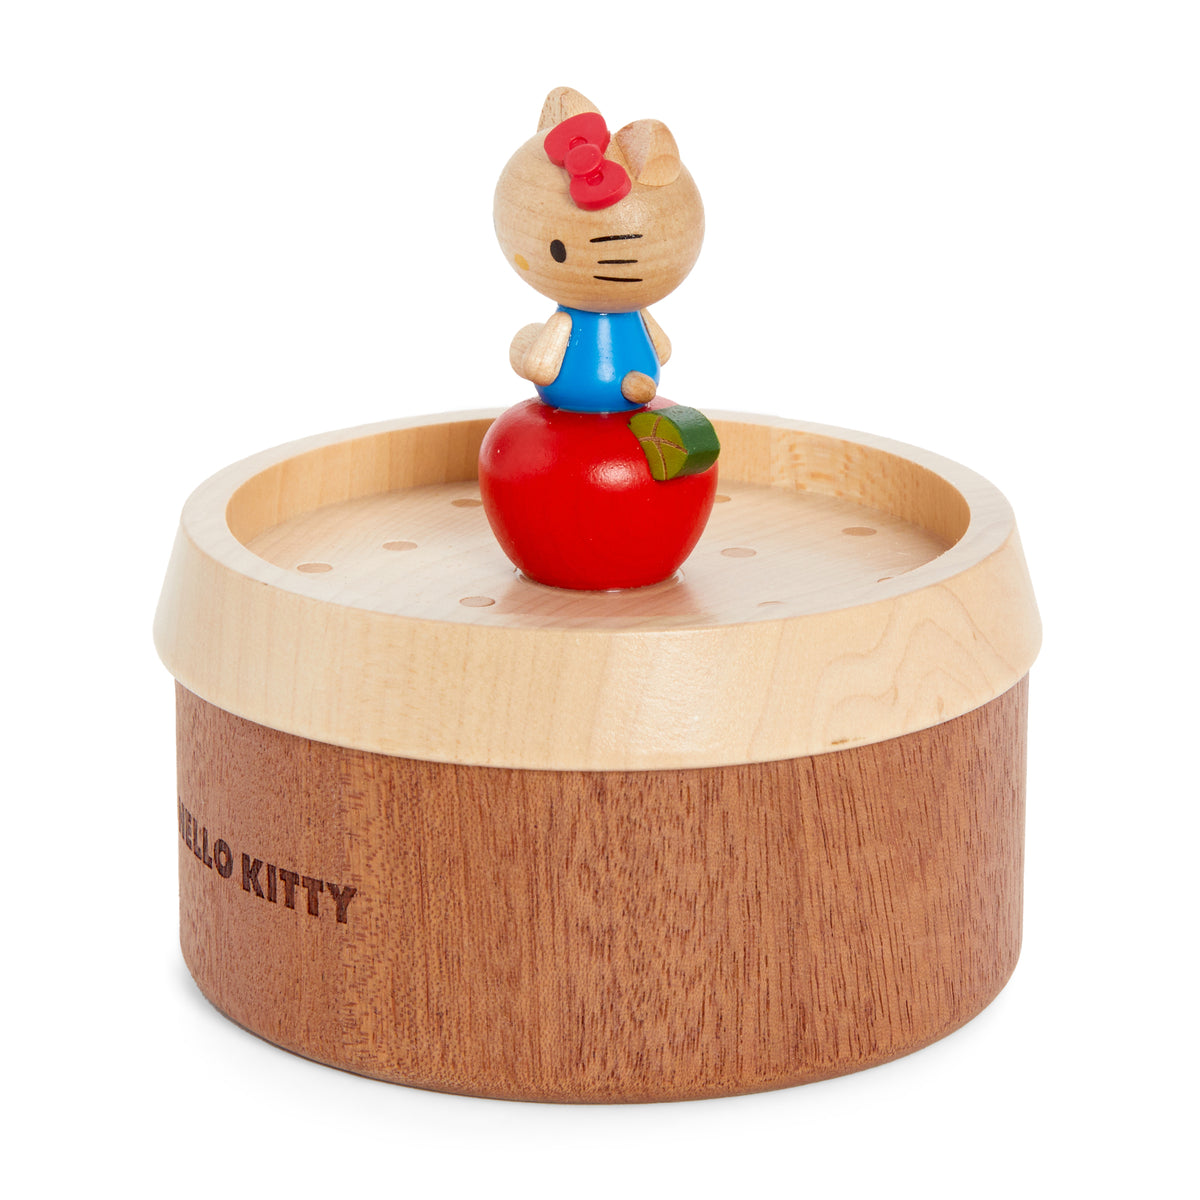 Hello Kitty Wooden Trinket Box Toys&amp;Games JEANCO   